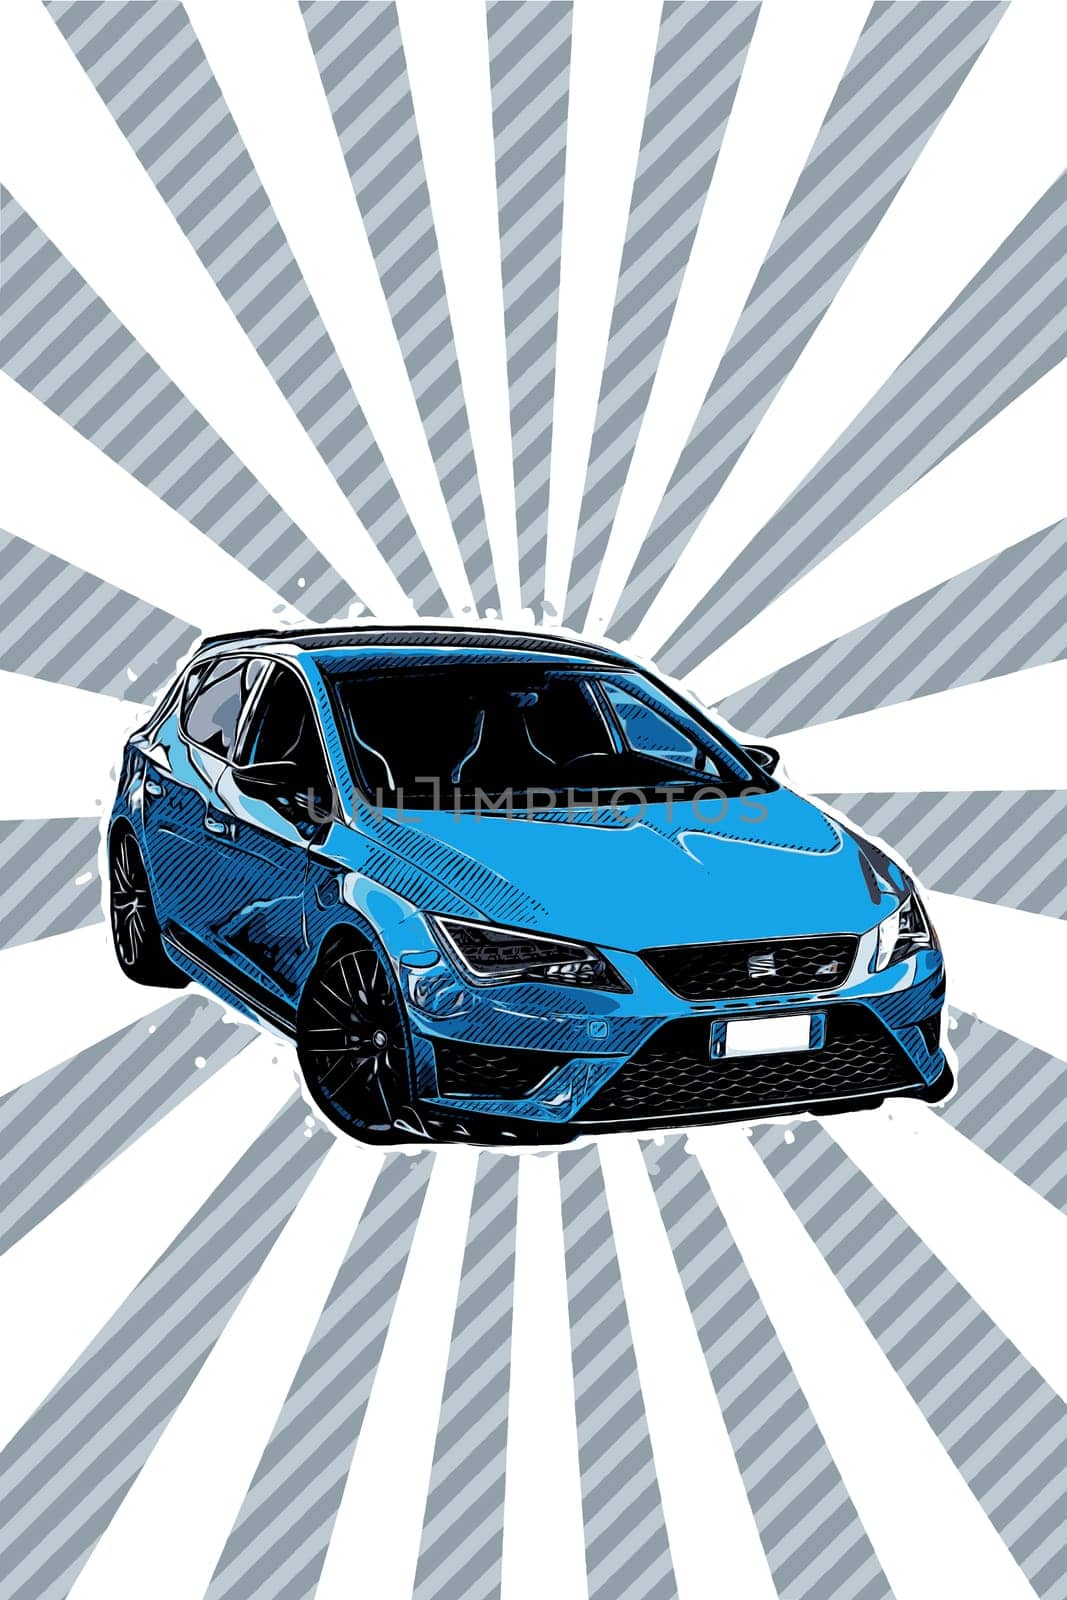 Blue modern car, seat, pop art comic style illustration, pattern background